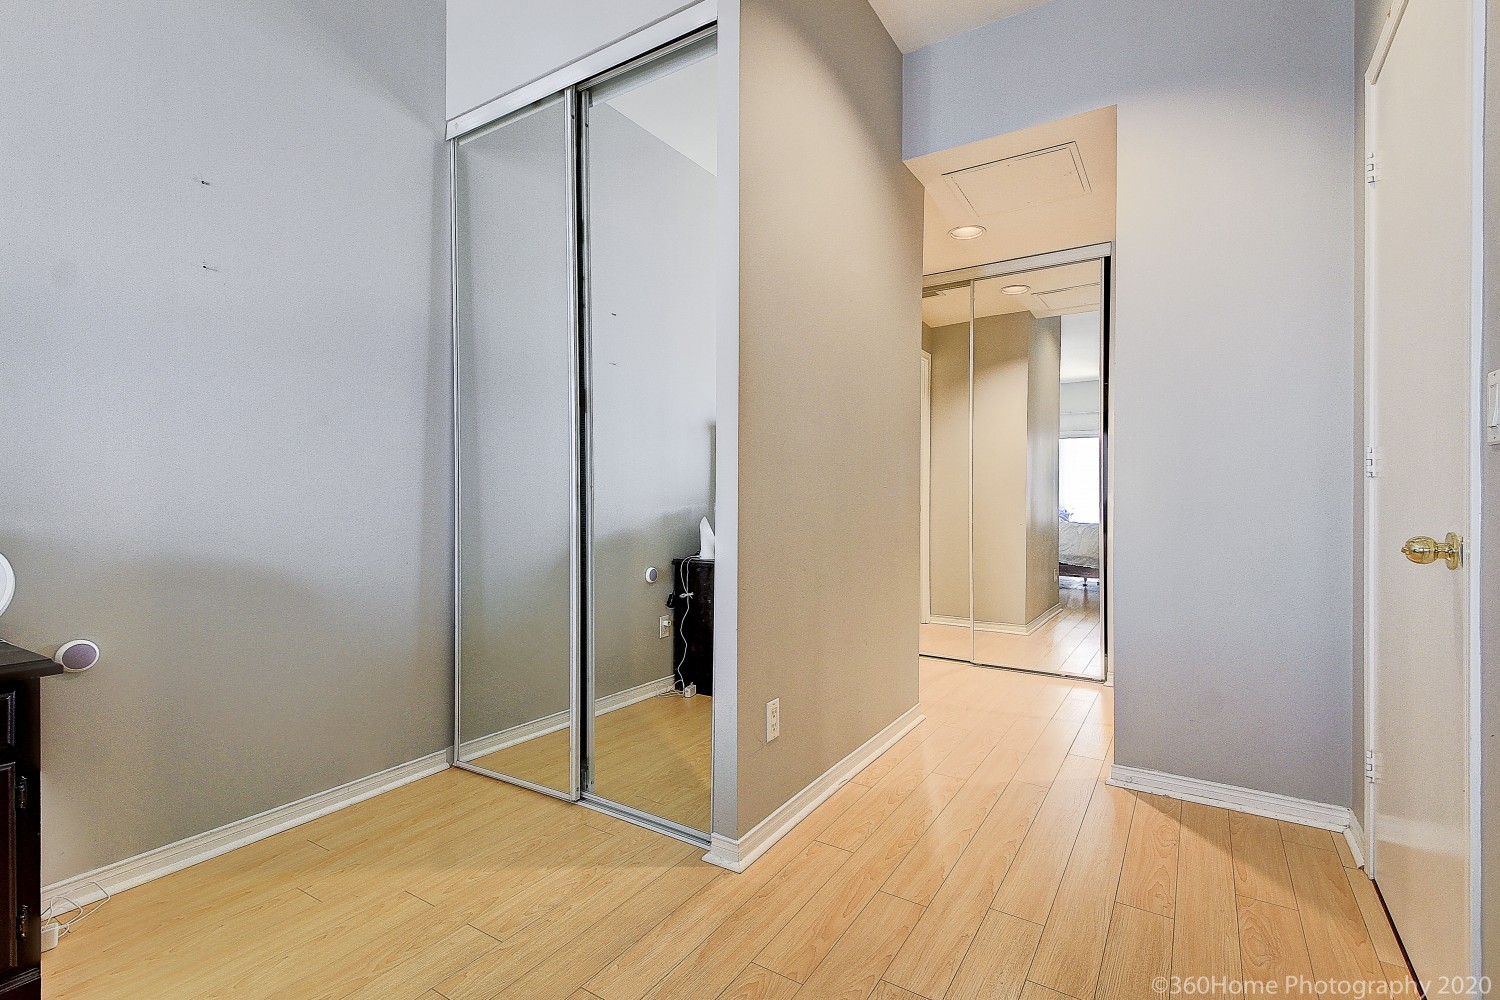 Light brown laminate floors and closet with mirror doors.